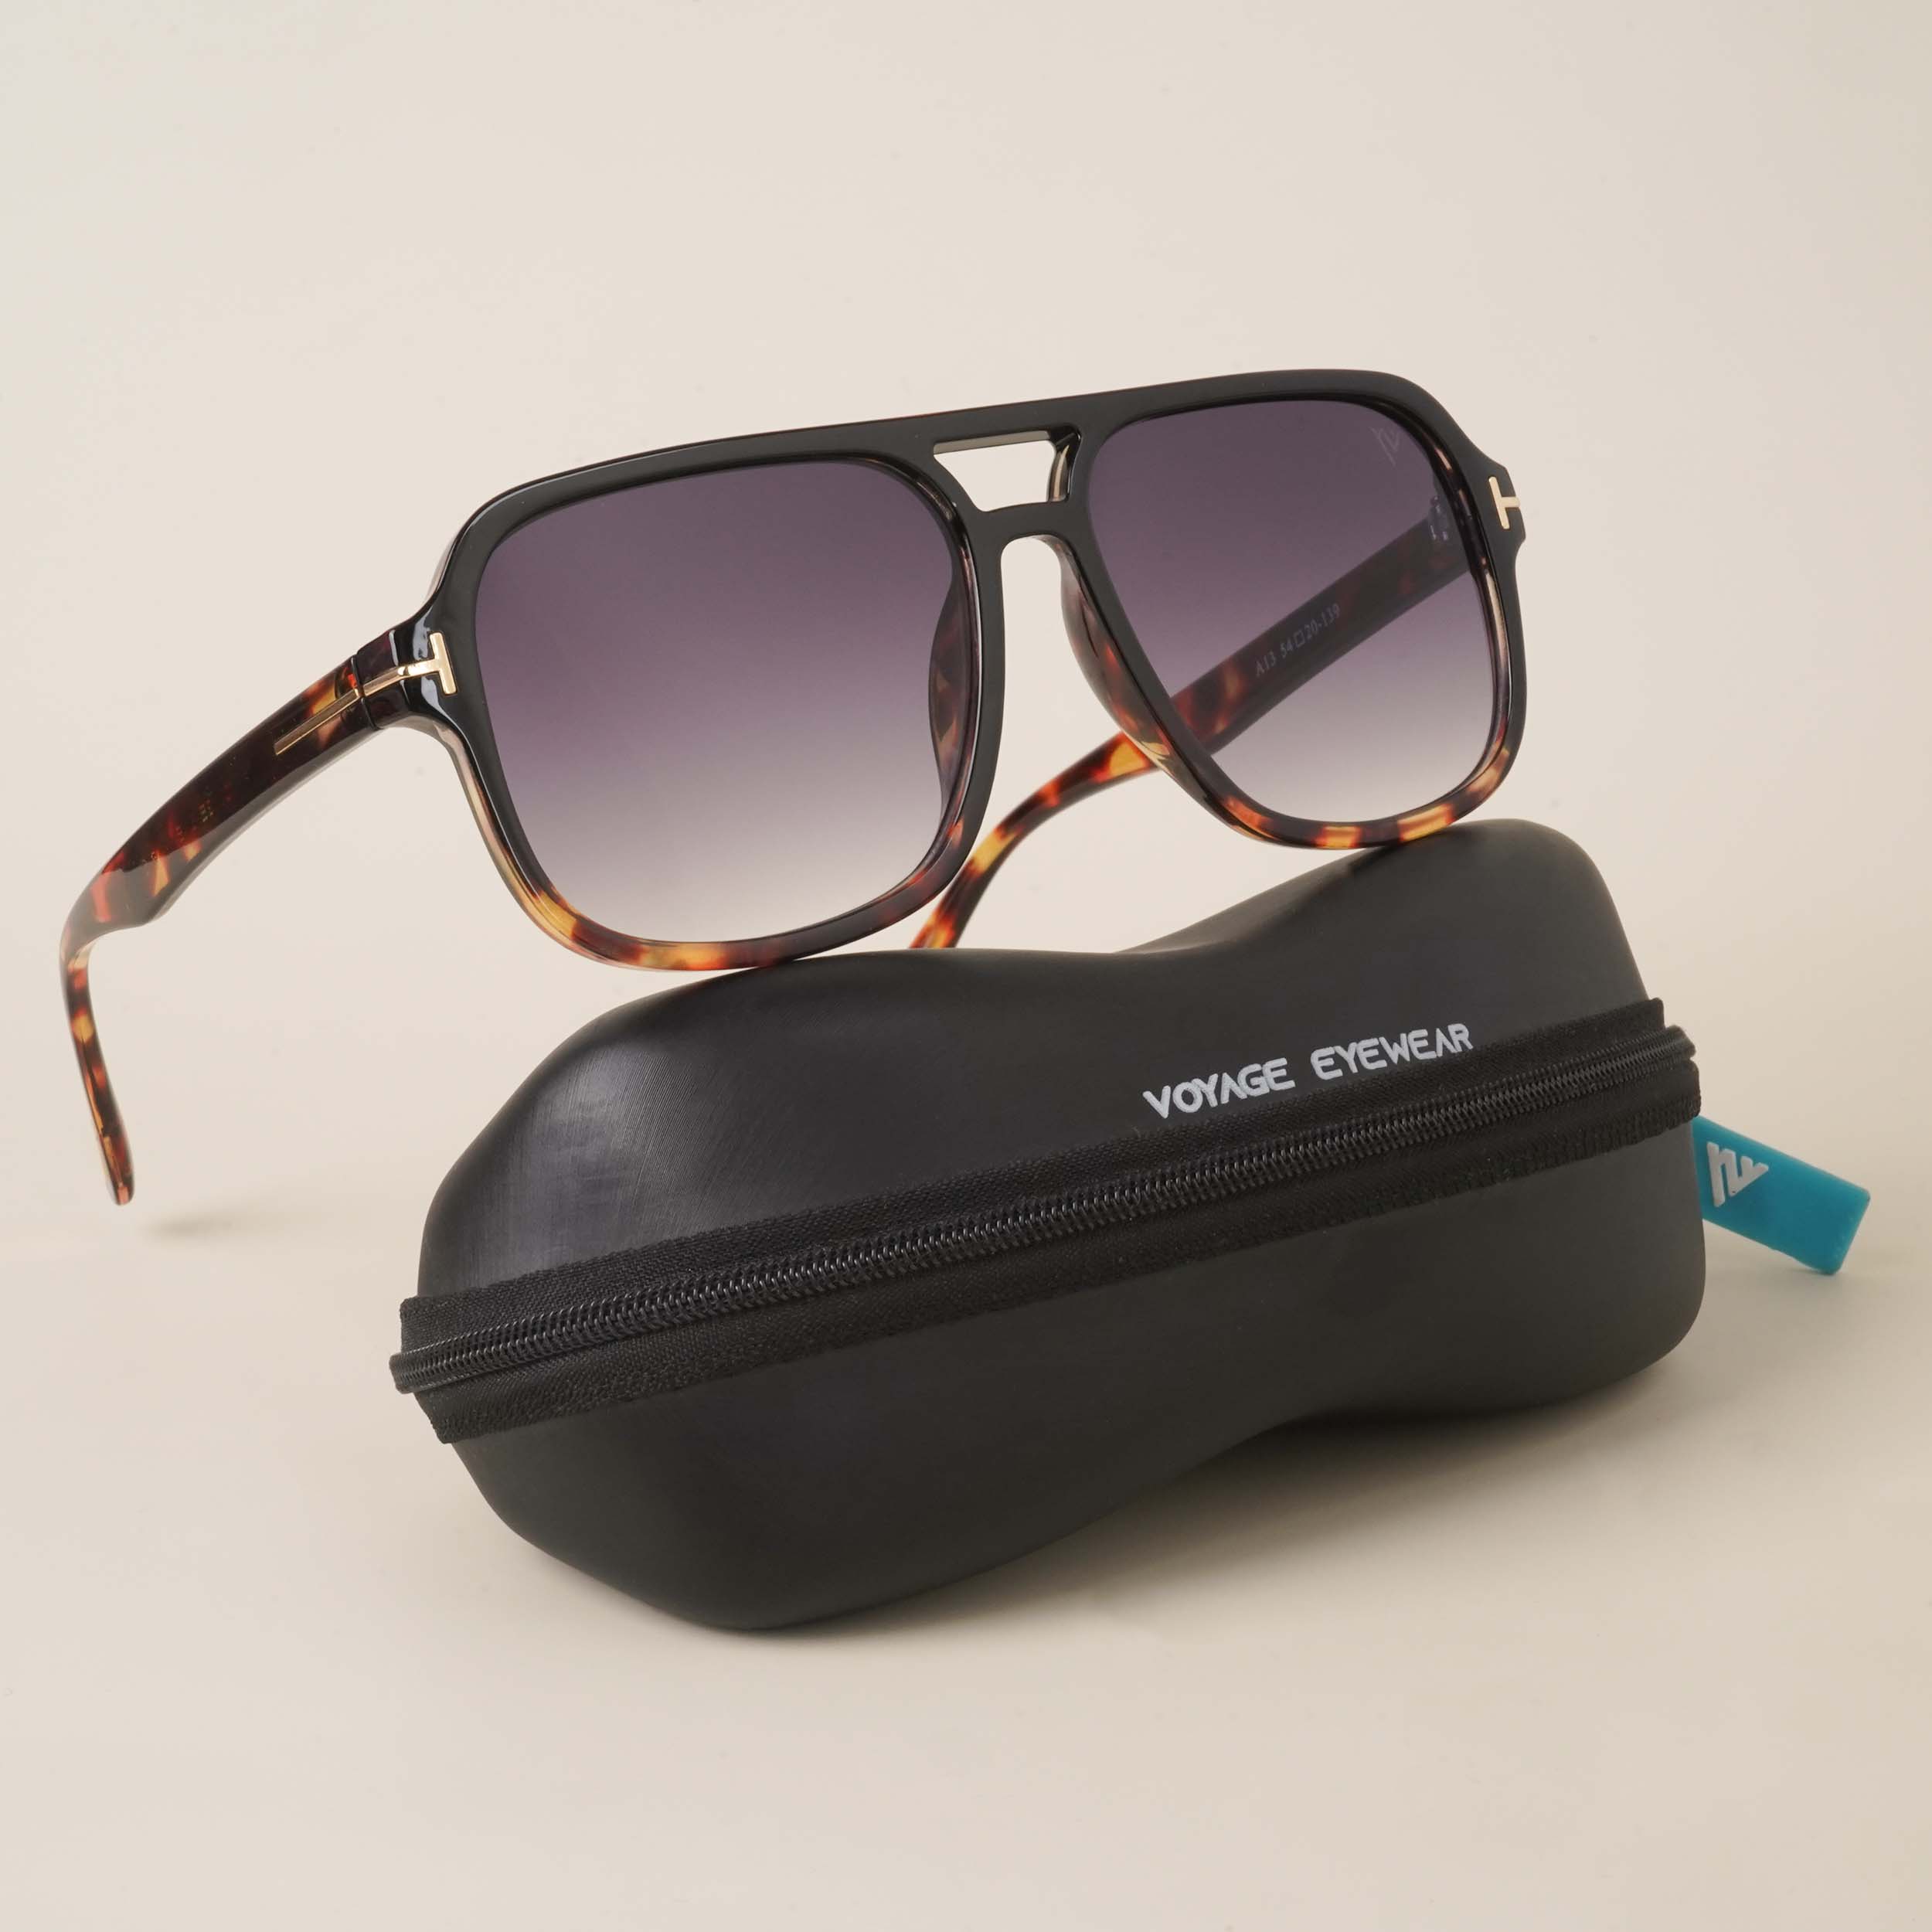 Voyage Grey Wayfarer Sunglasses - MG3939